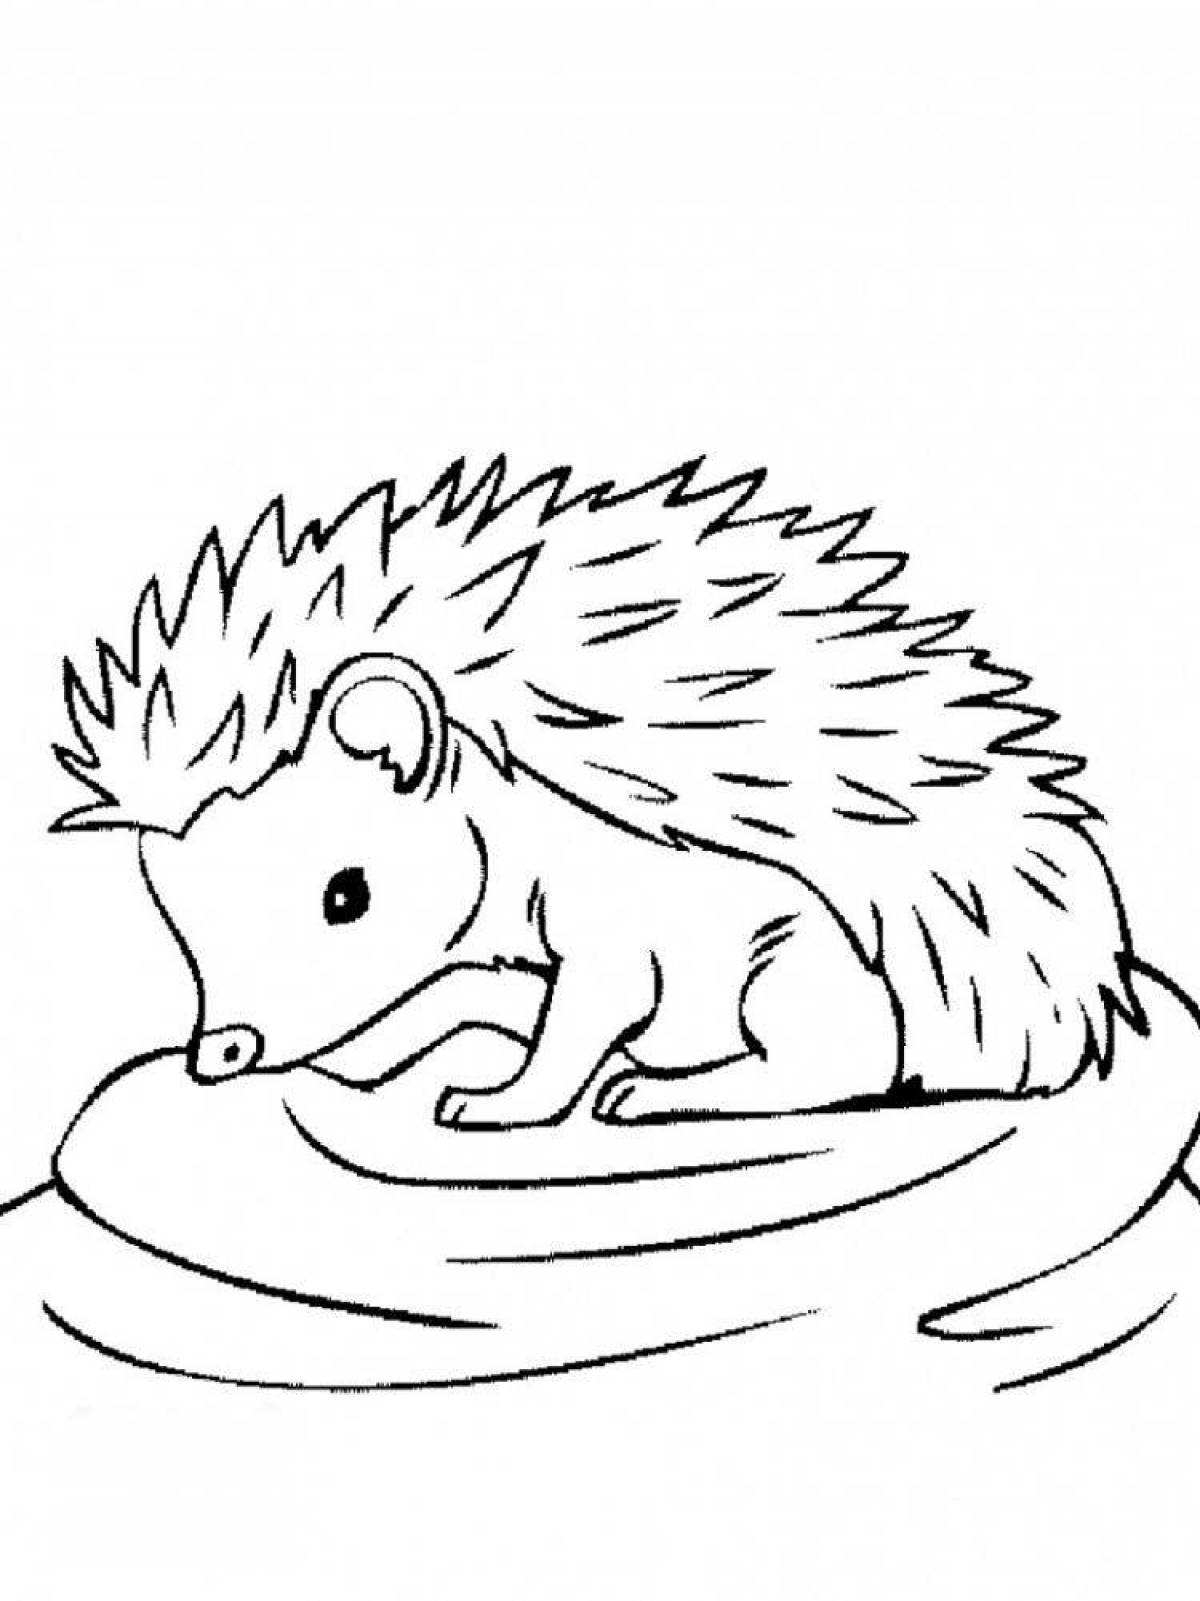 Coloring page cute eared hedgehog